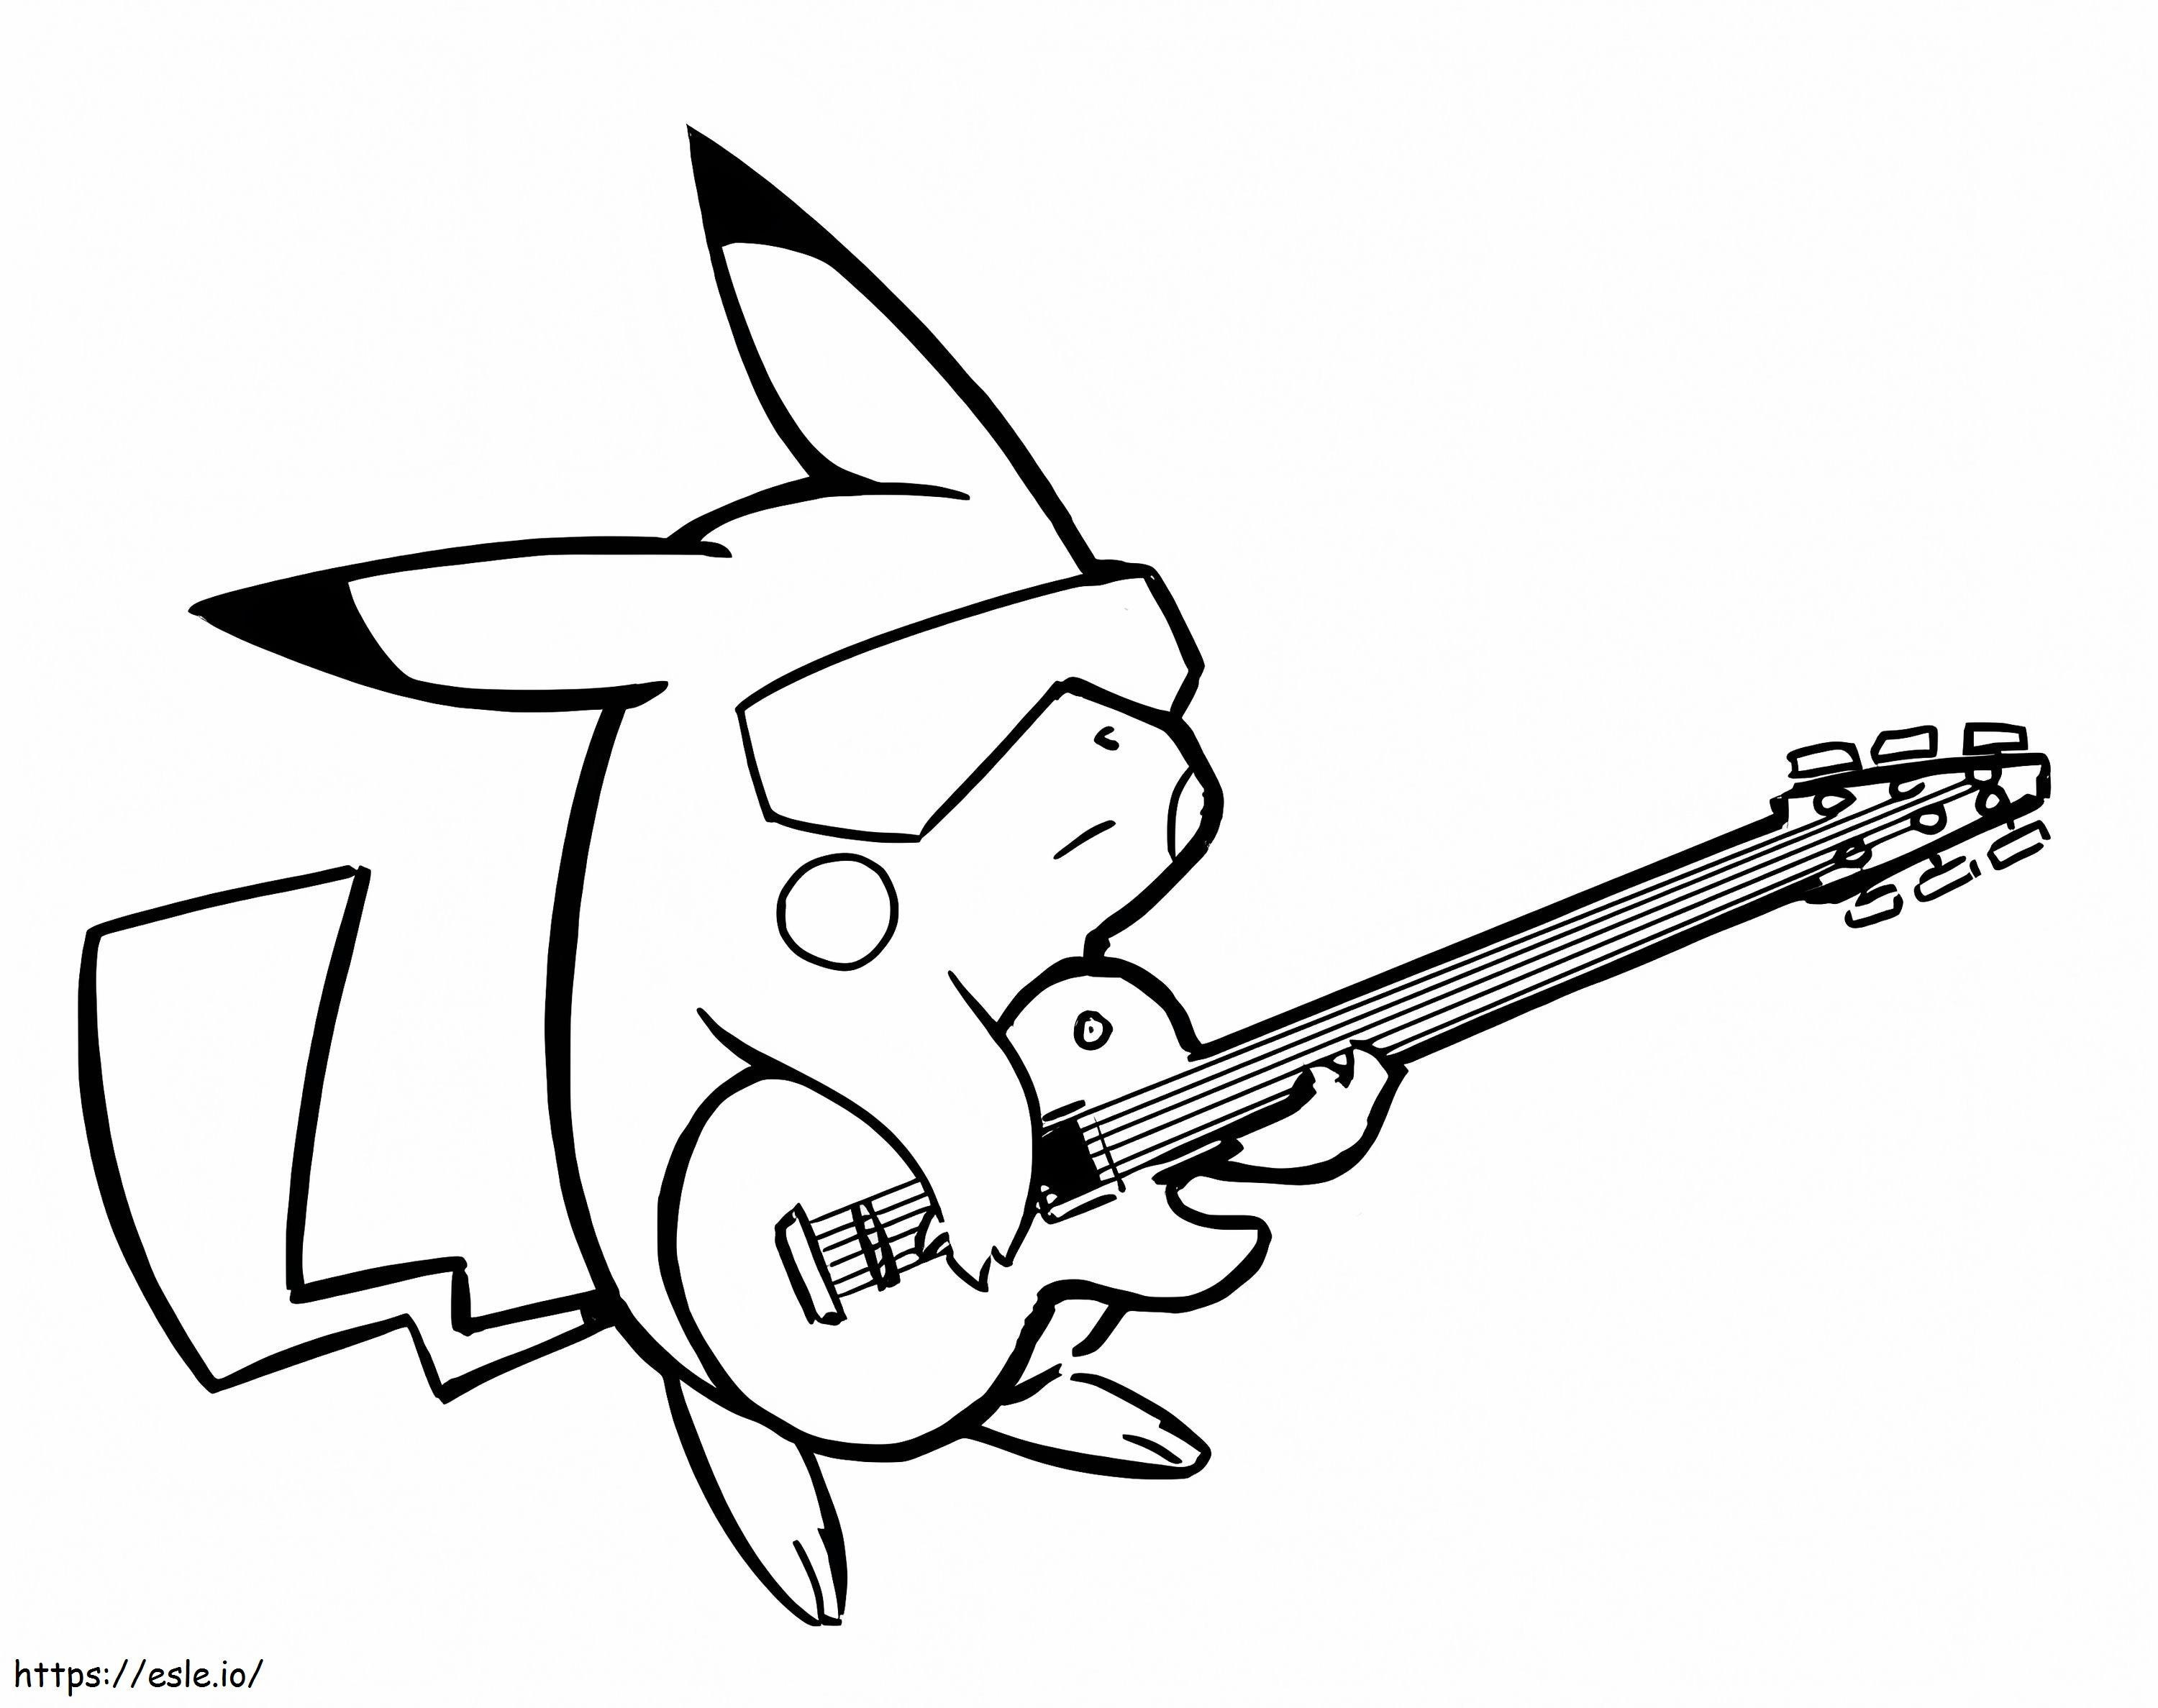 Pikachu Playing Guitar coloring page